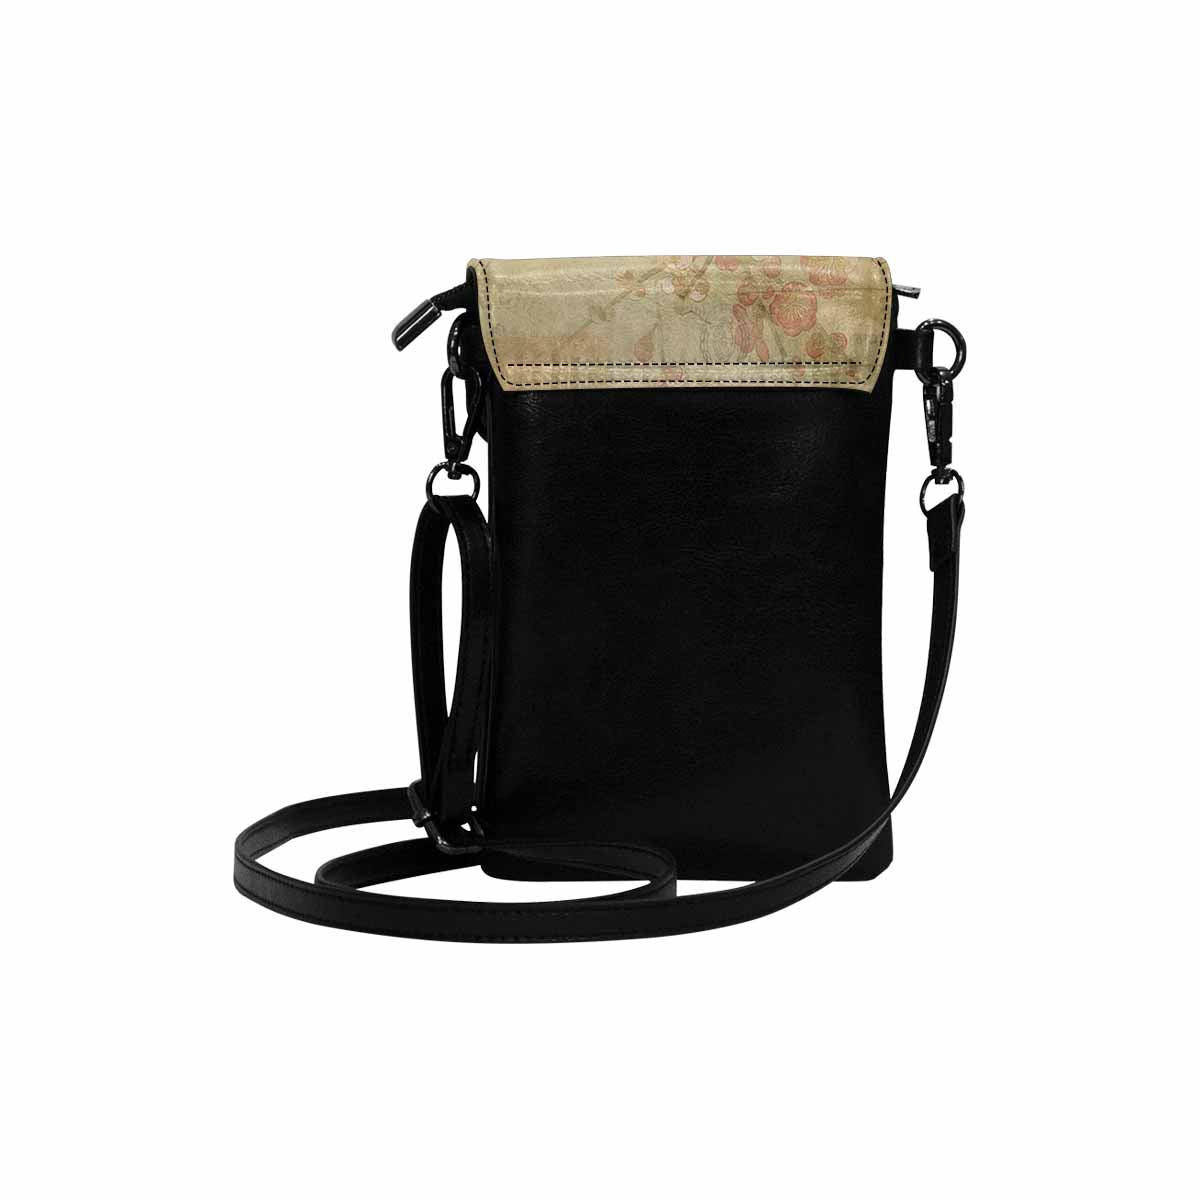 General Victorian cell phone purse, mobile purse, Design 25